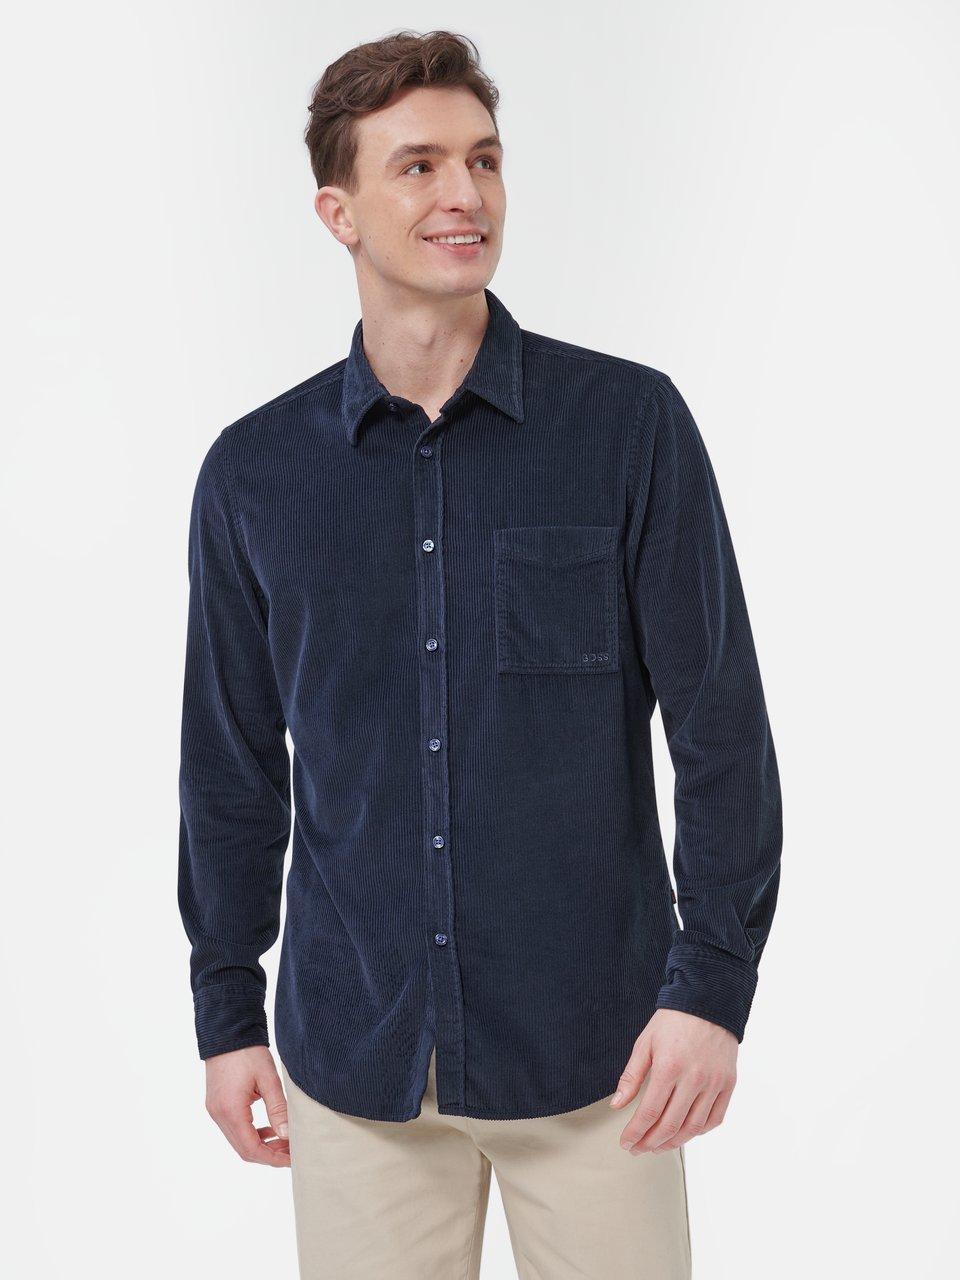 Hemden bei Herrenhemden kaufen Peter Hahn | online